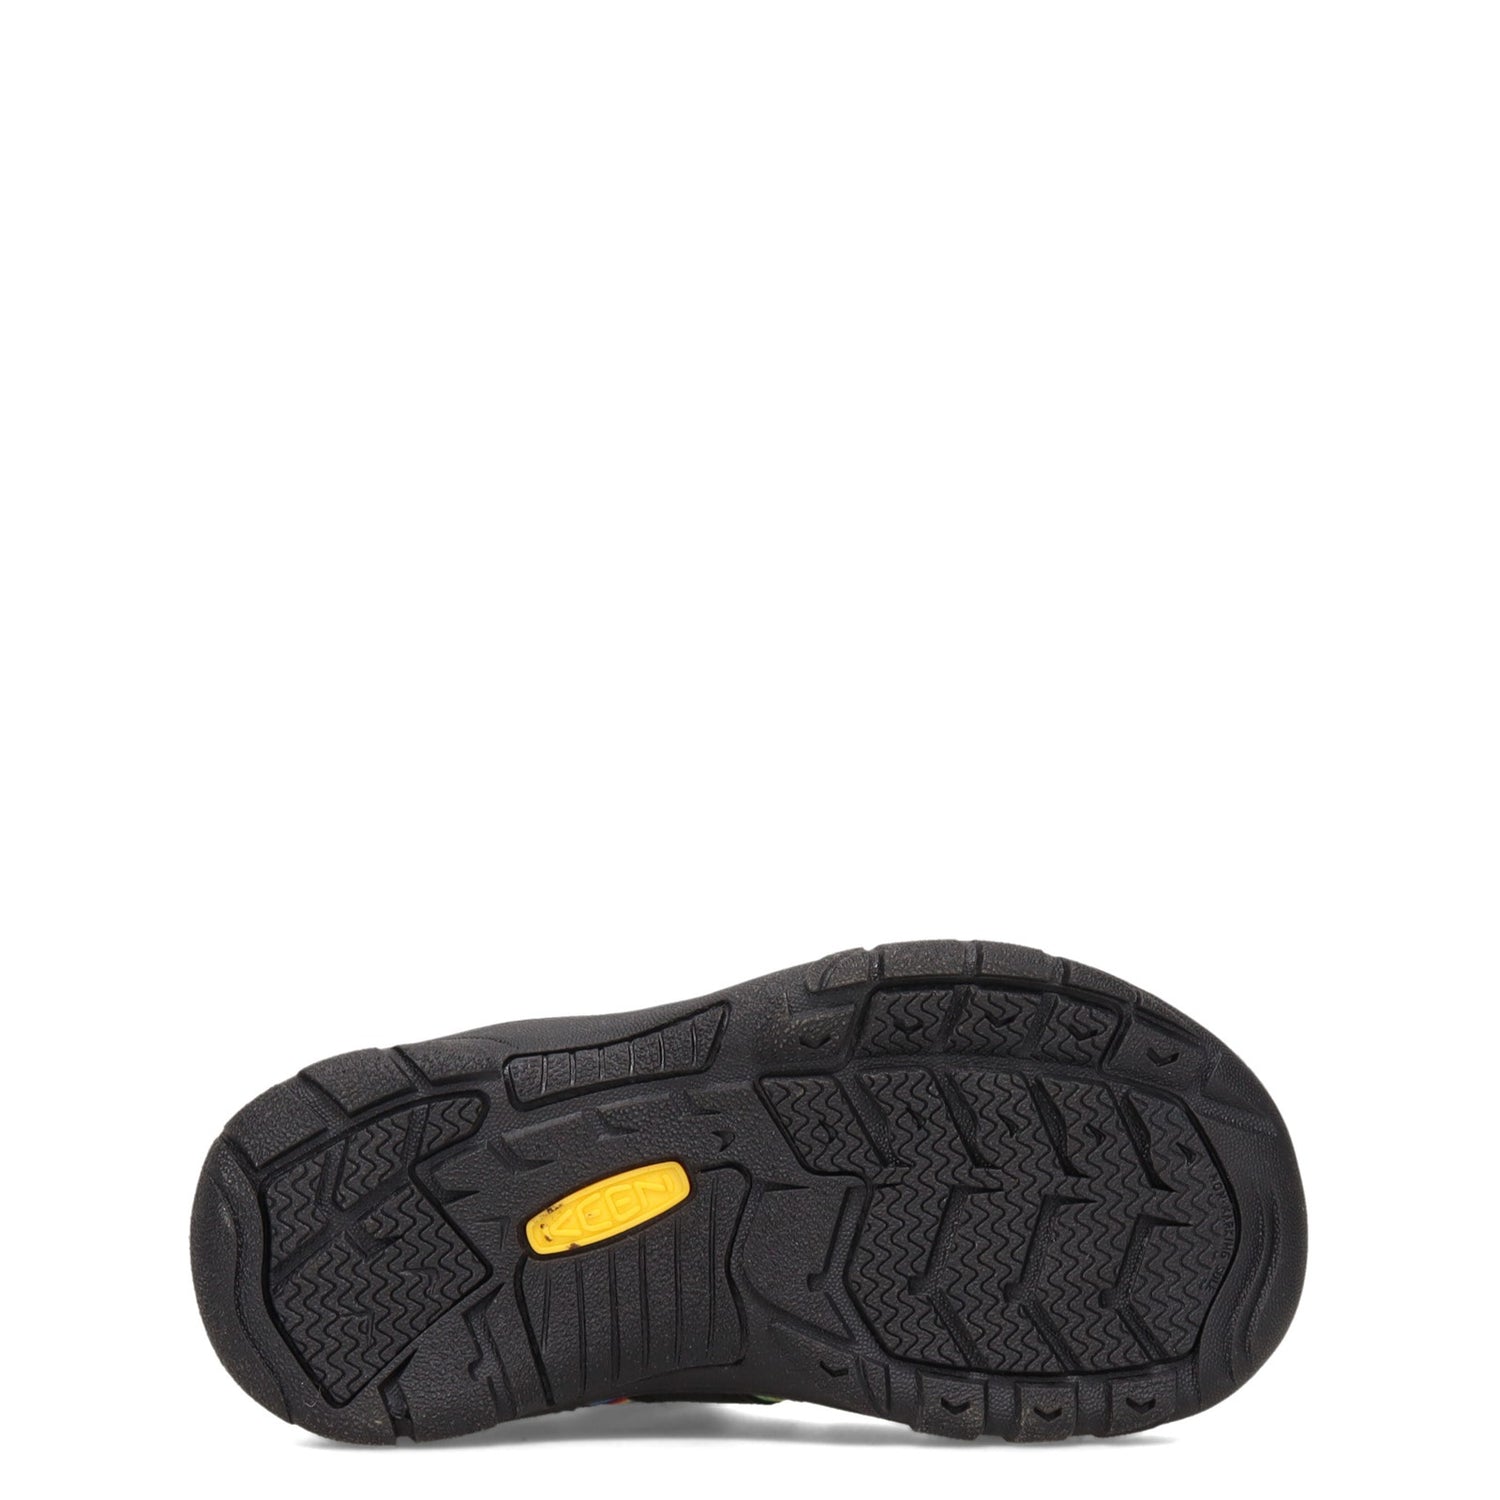 Peltz Shoes  Boy's Keen Newport H2 Sandal - Toddler & Little Kid Black Multi 1025507